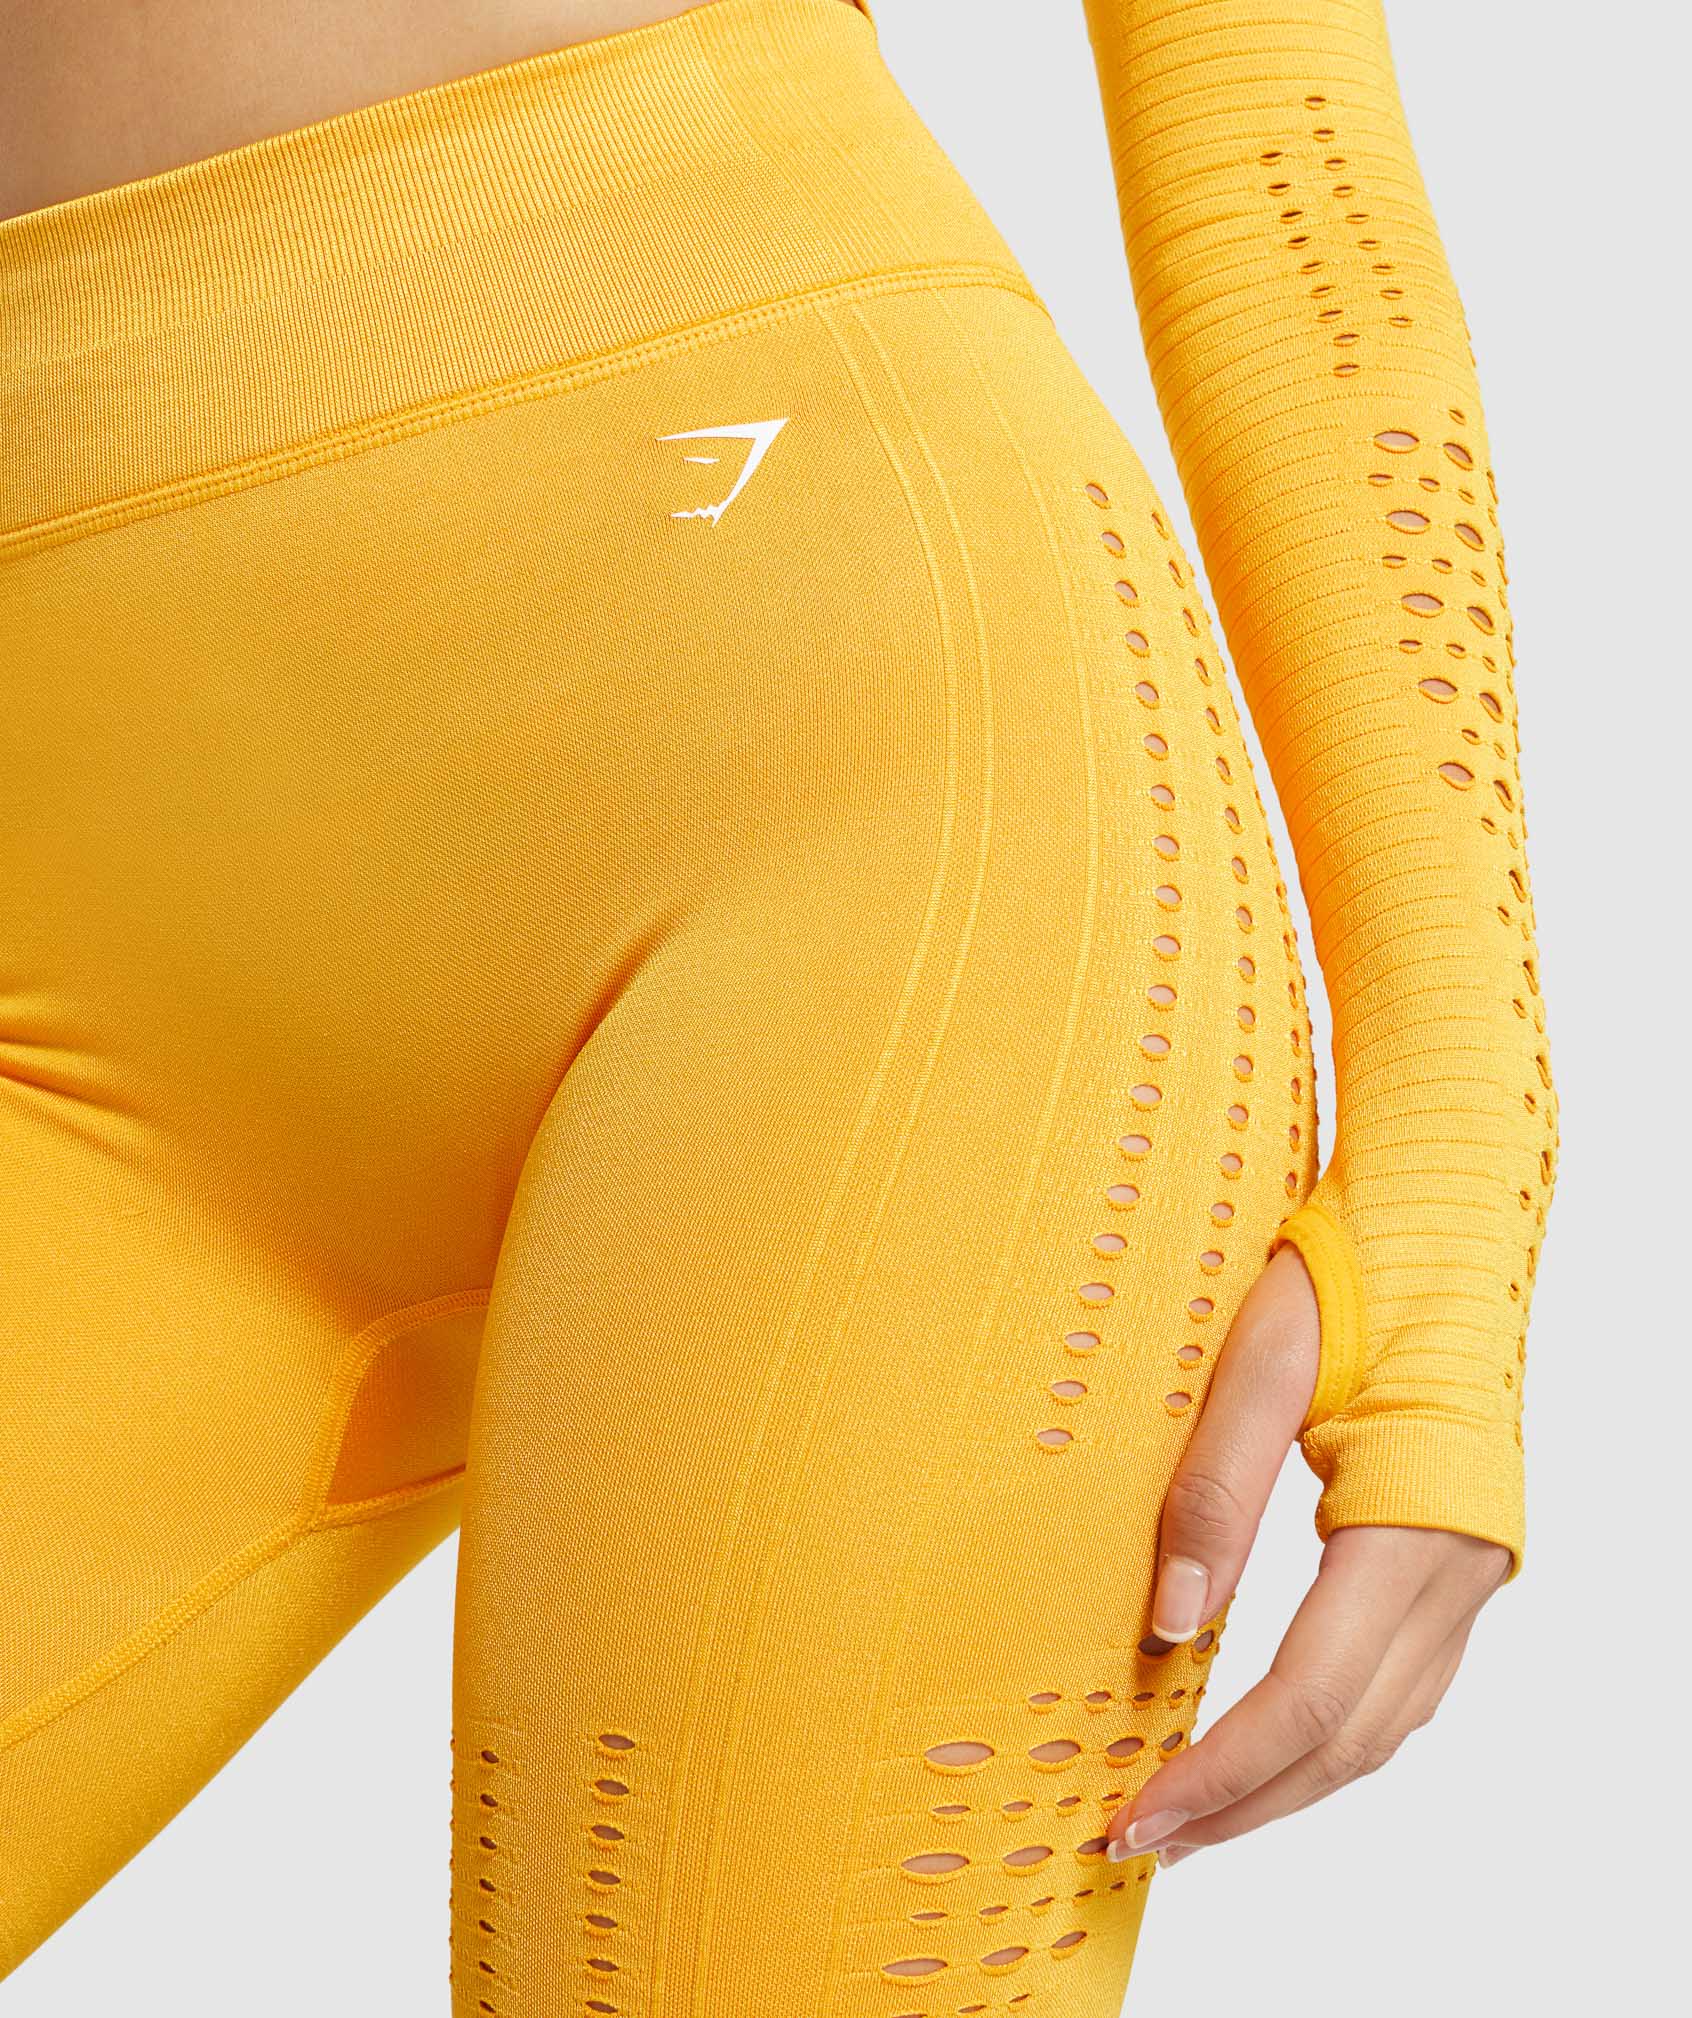 Gymshark Energy Seamless Shorts - Glitch Yellow